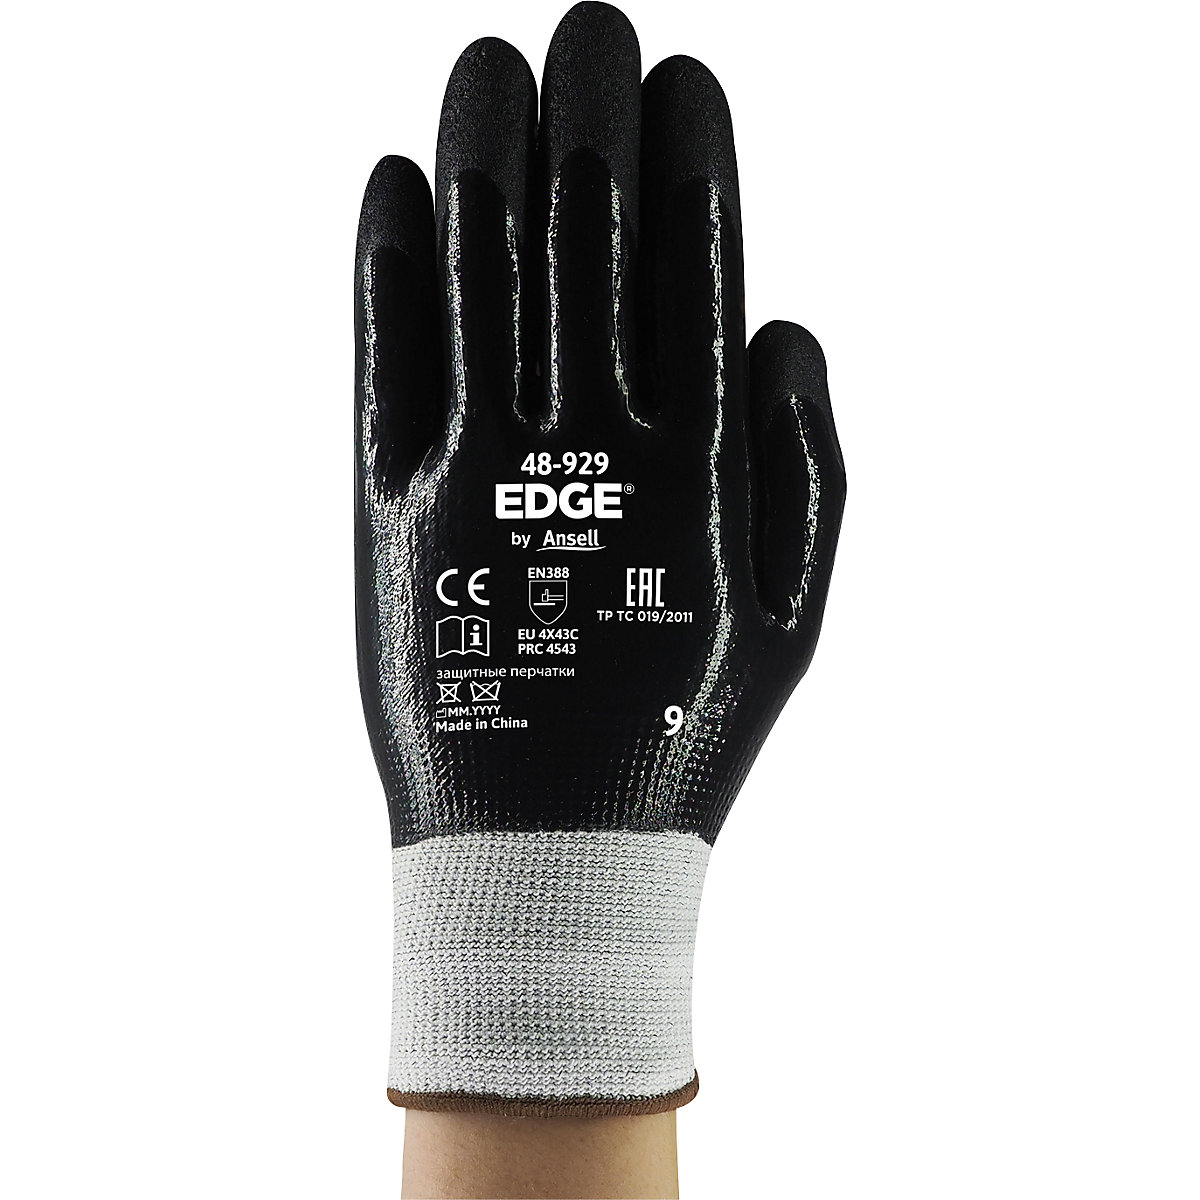 Delovne rokavice EDGE® 48-929 – Ansell